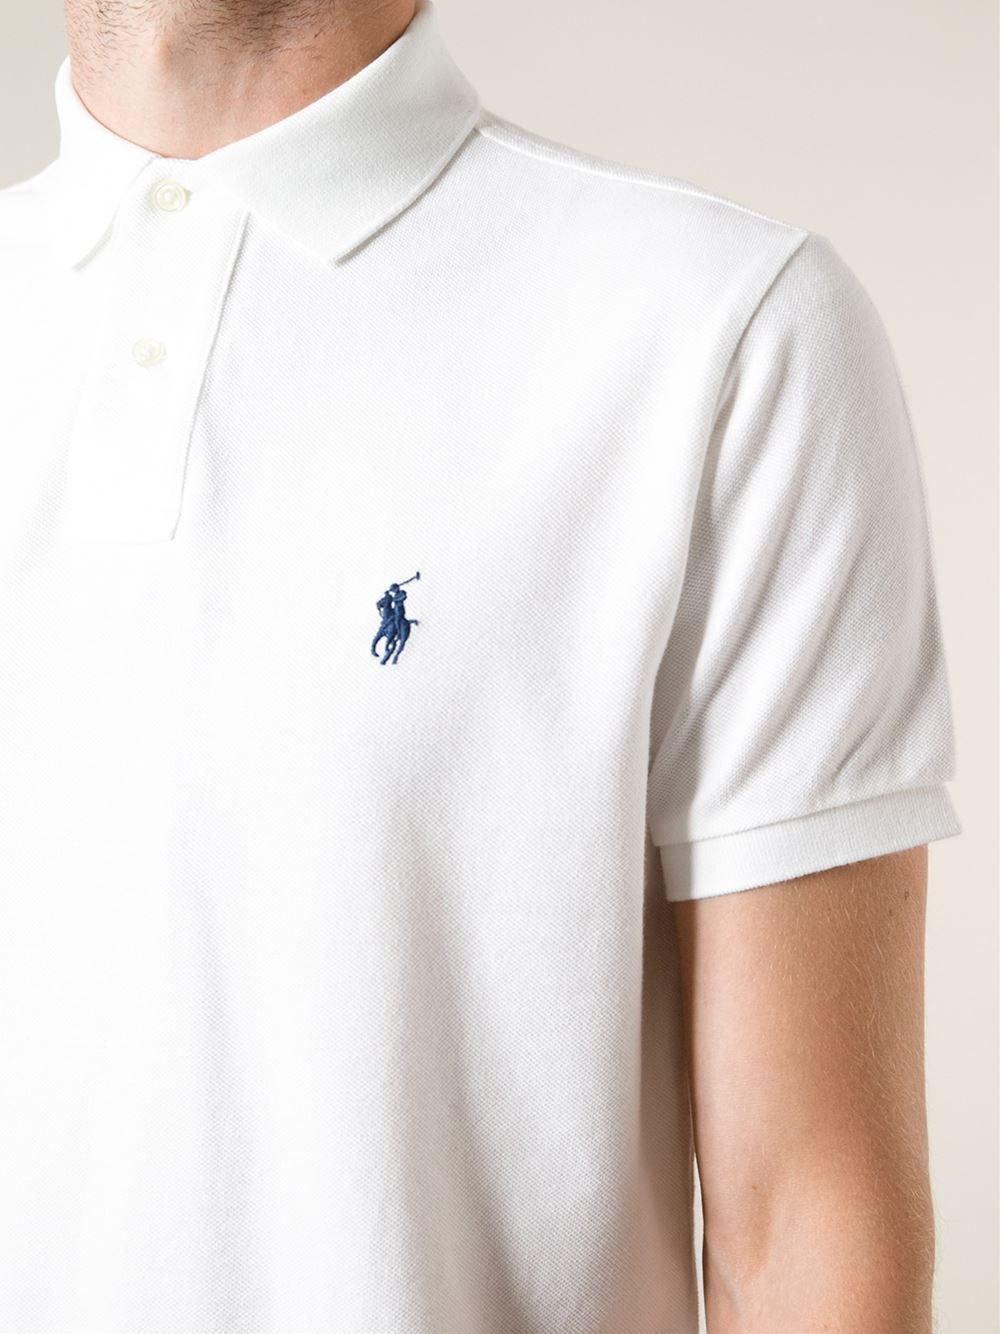 White and Blue Polo Logo - Polo Ralph Lauren Blue Logo Polo Shirt in White for Men - Lyst